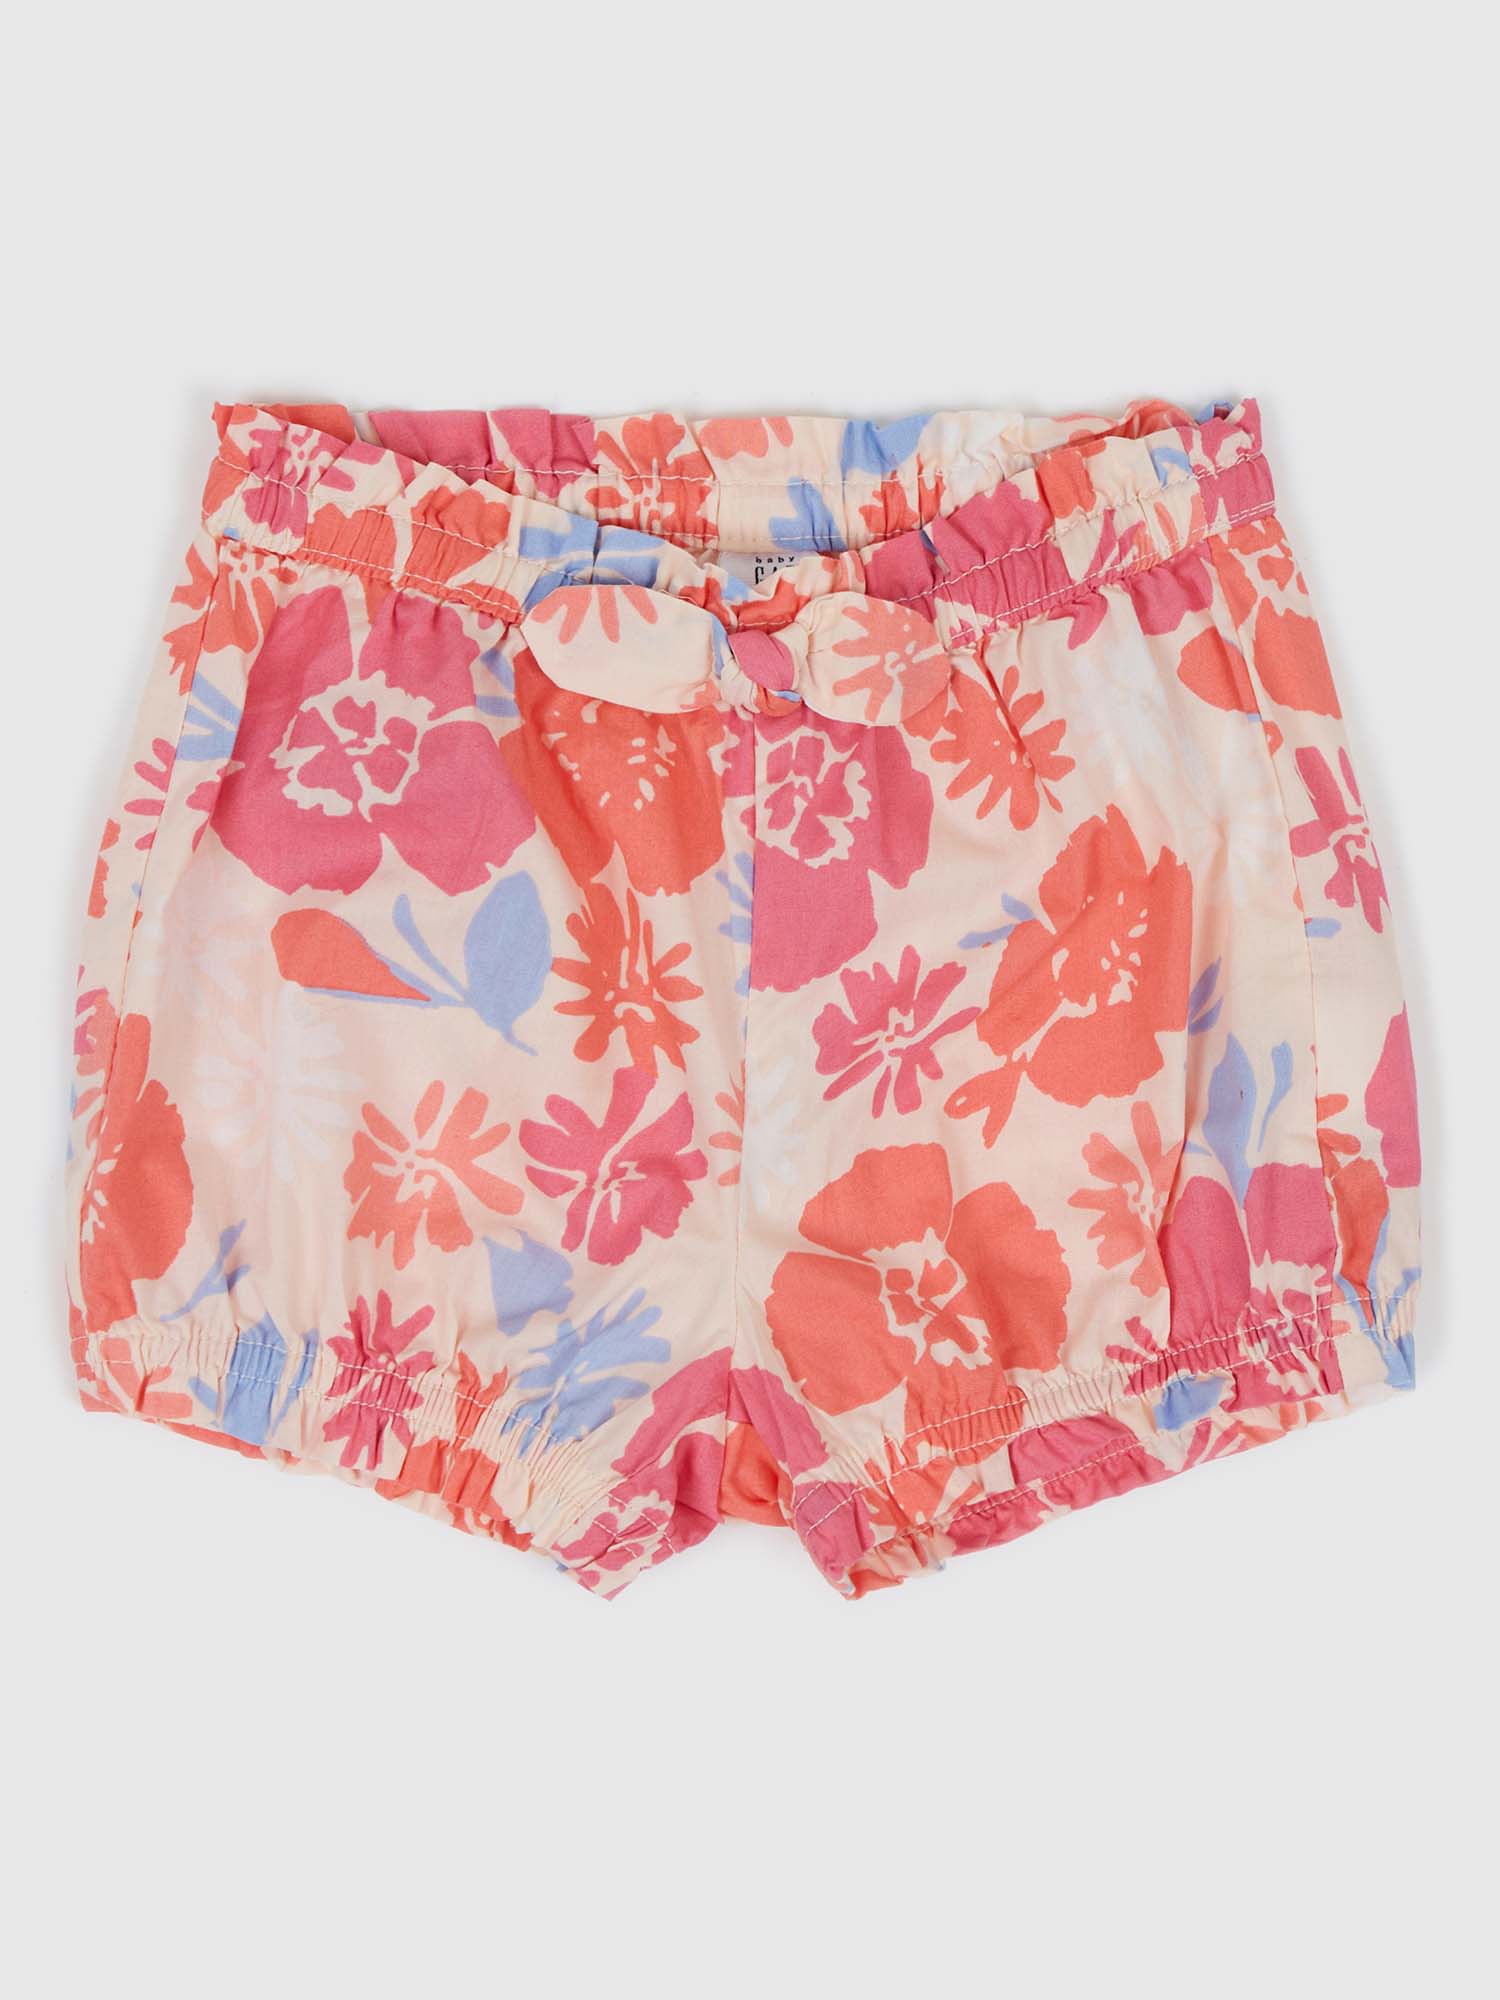 GAP Baby Flowered Shorts - Girls